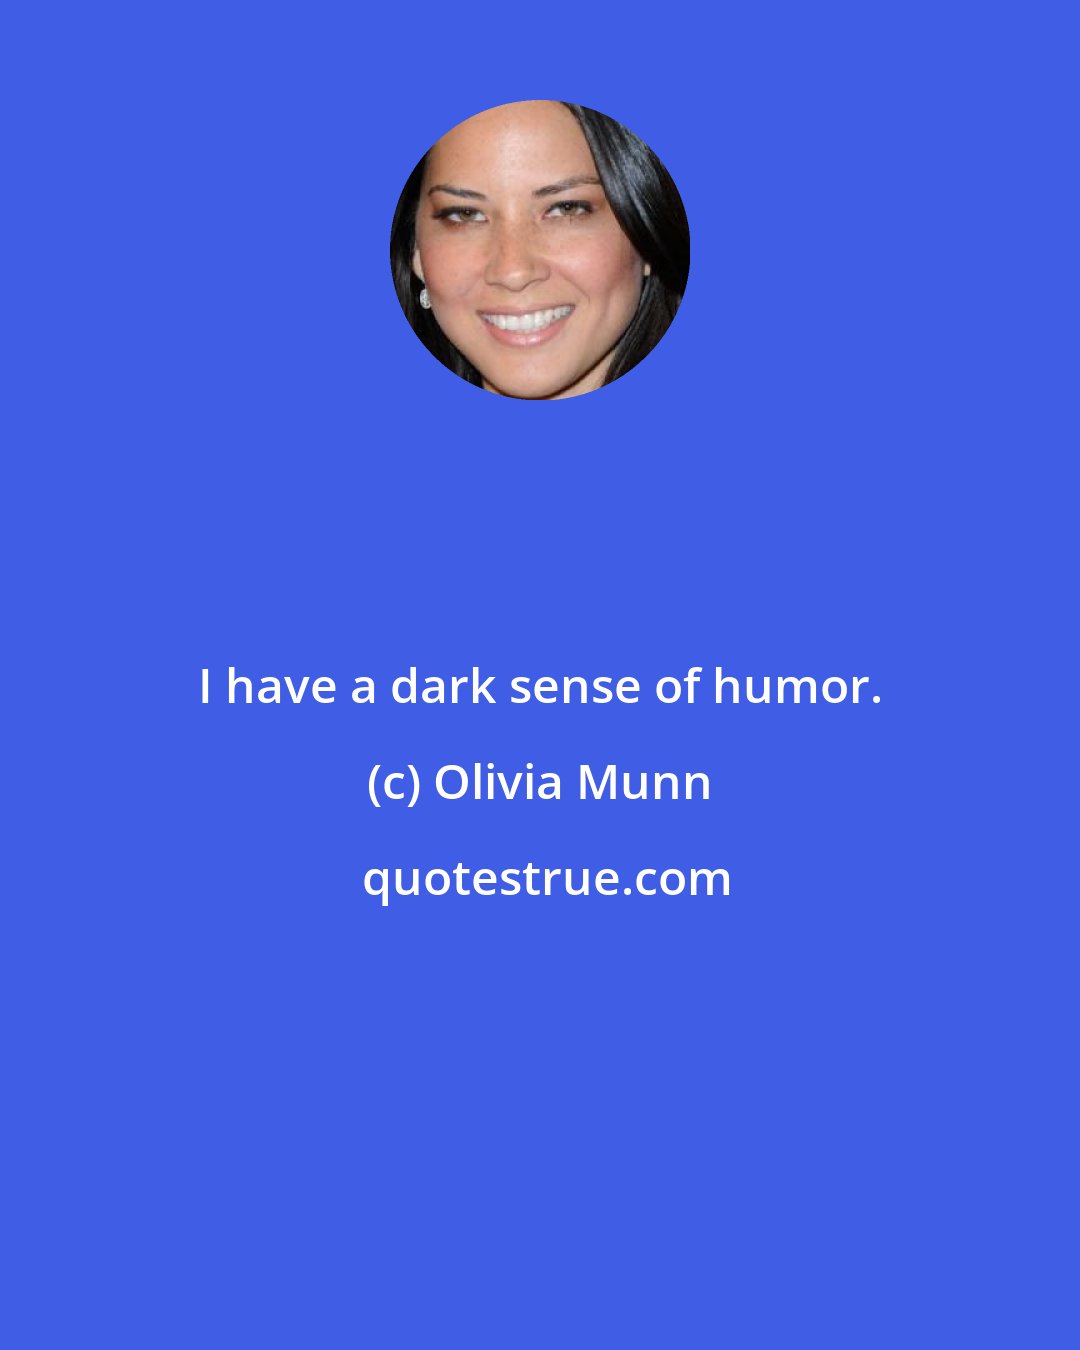 Olivia Munn: I have a dark sense of humor.